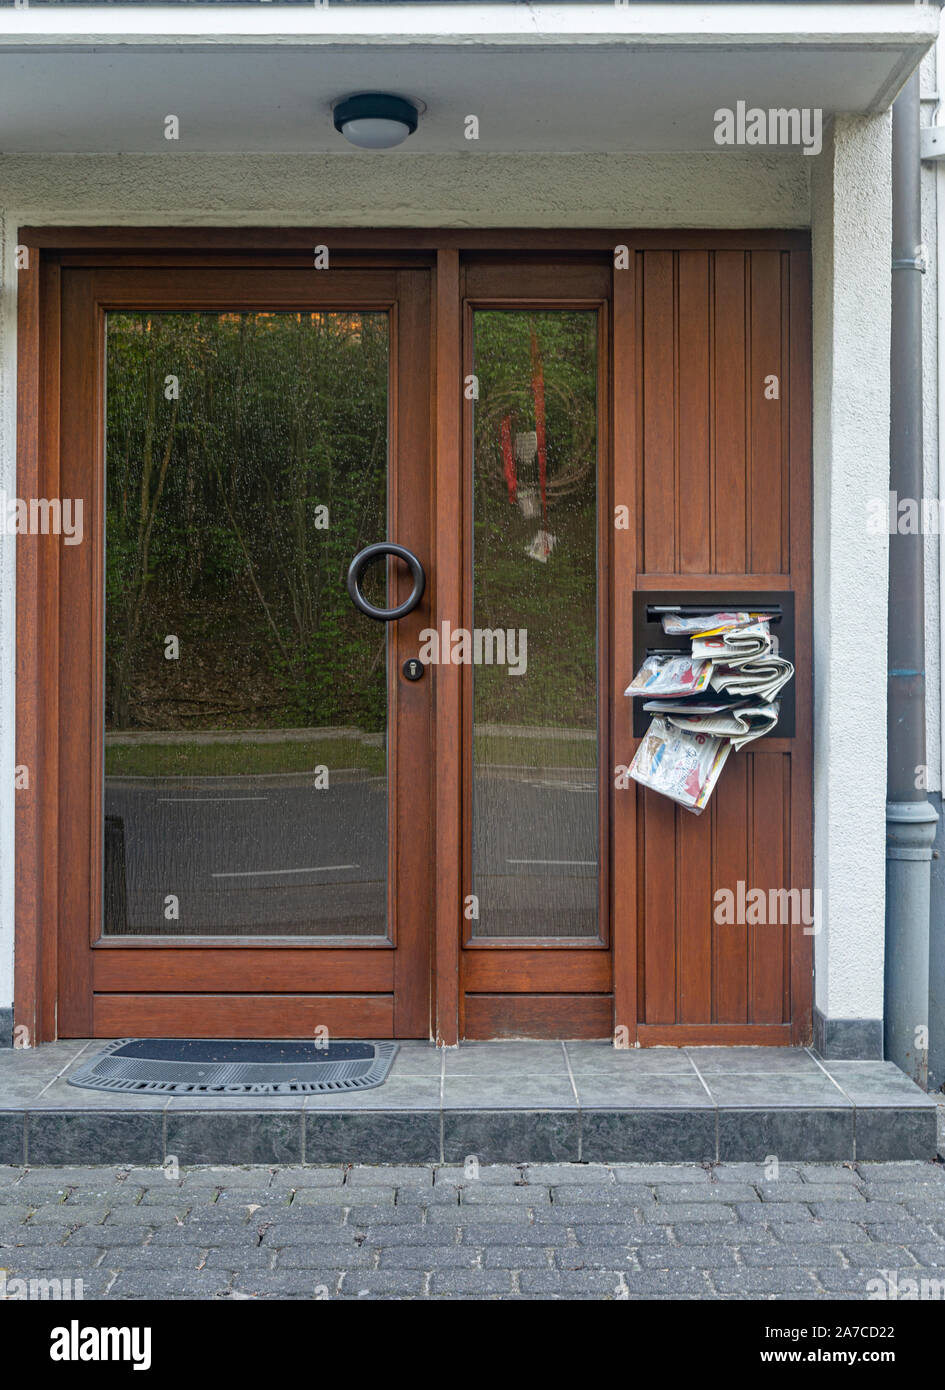 Puerta con buzón fotografías e imágenes de alta resolución - Alamy